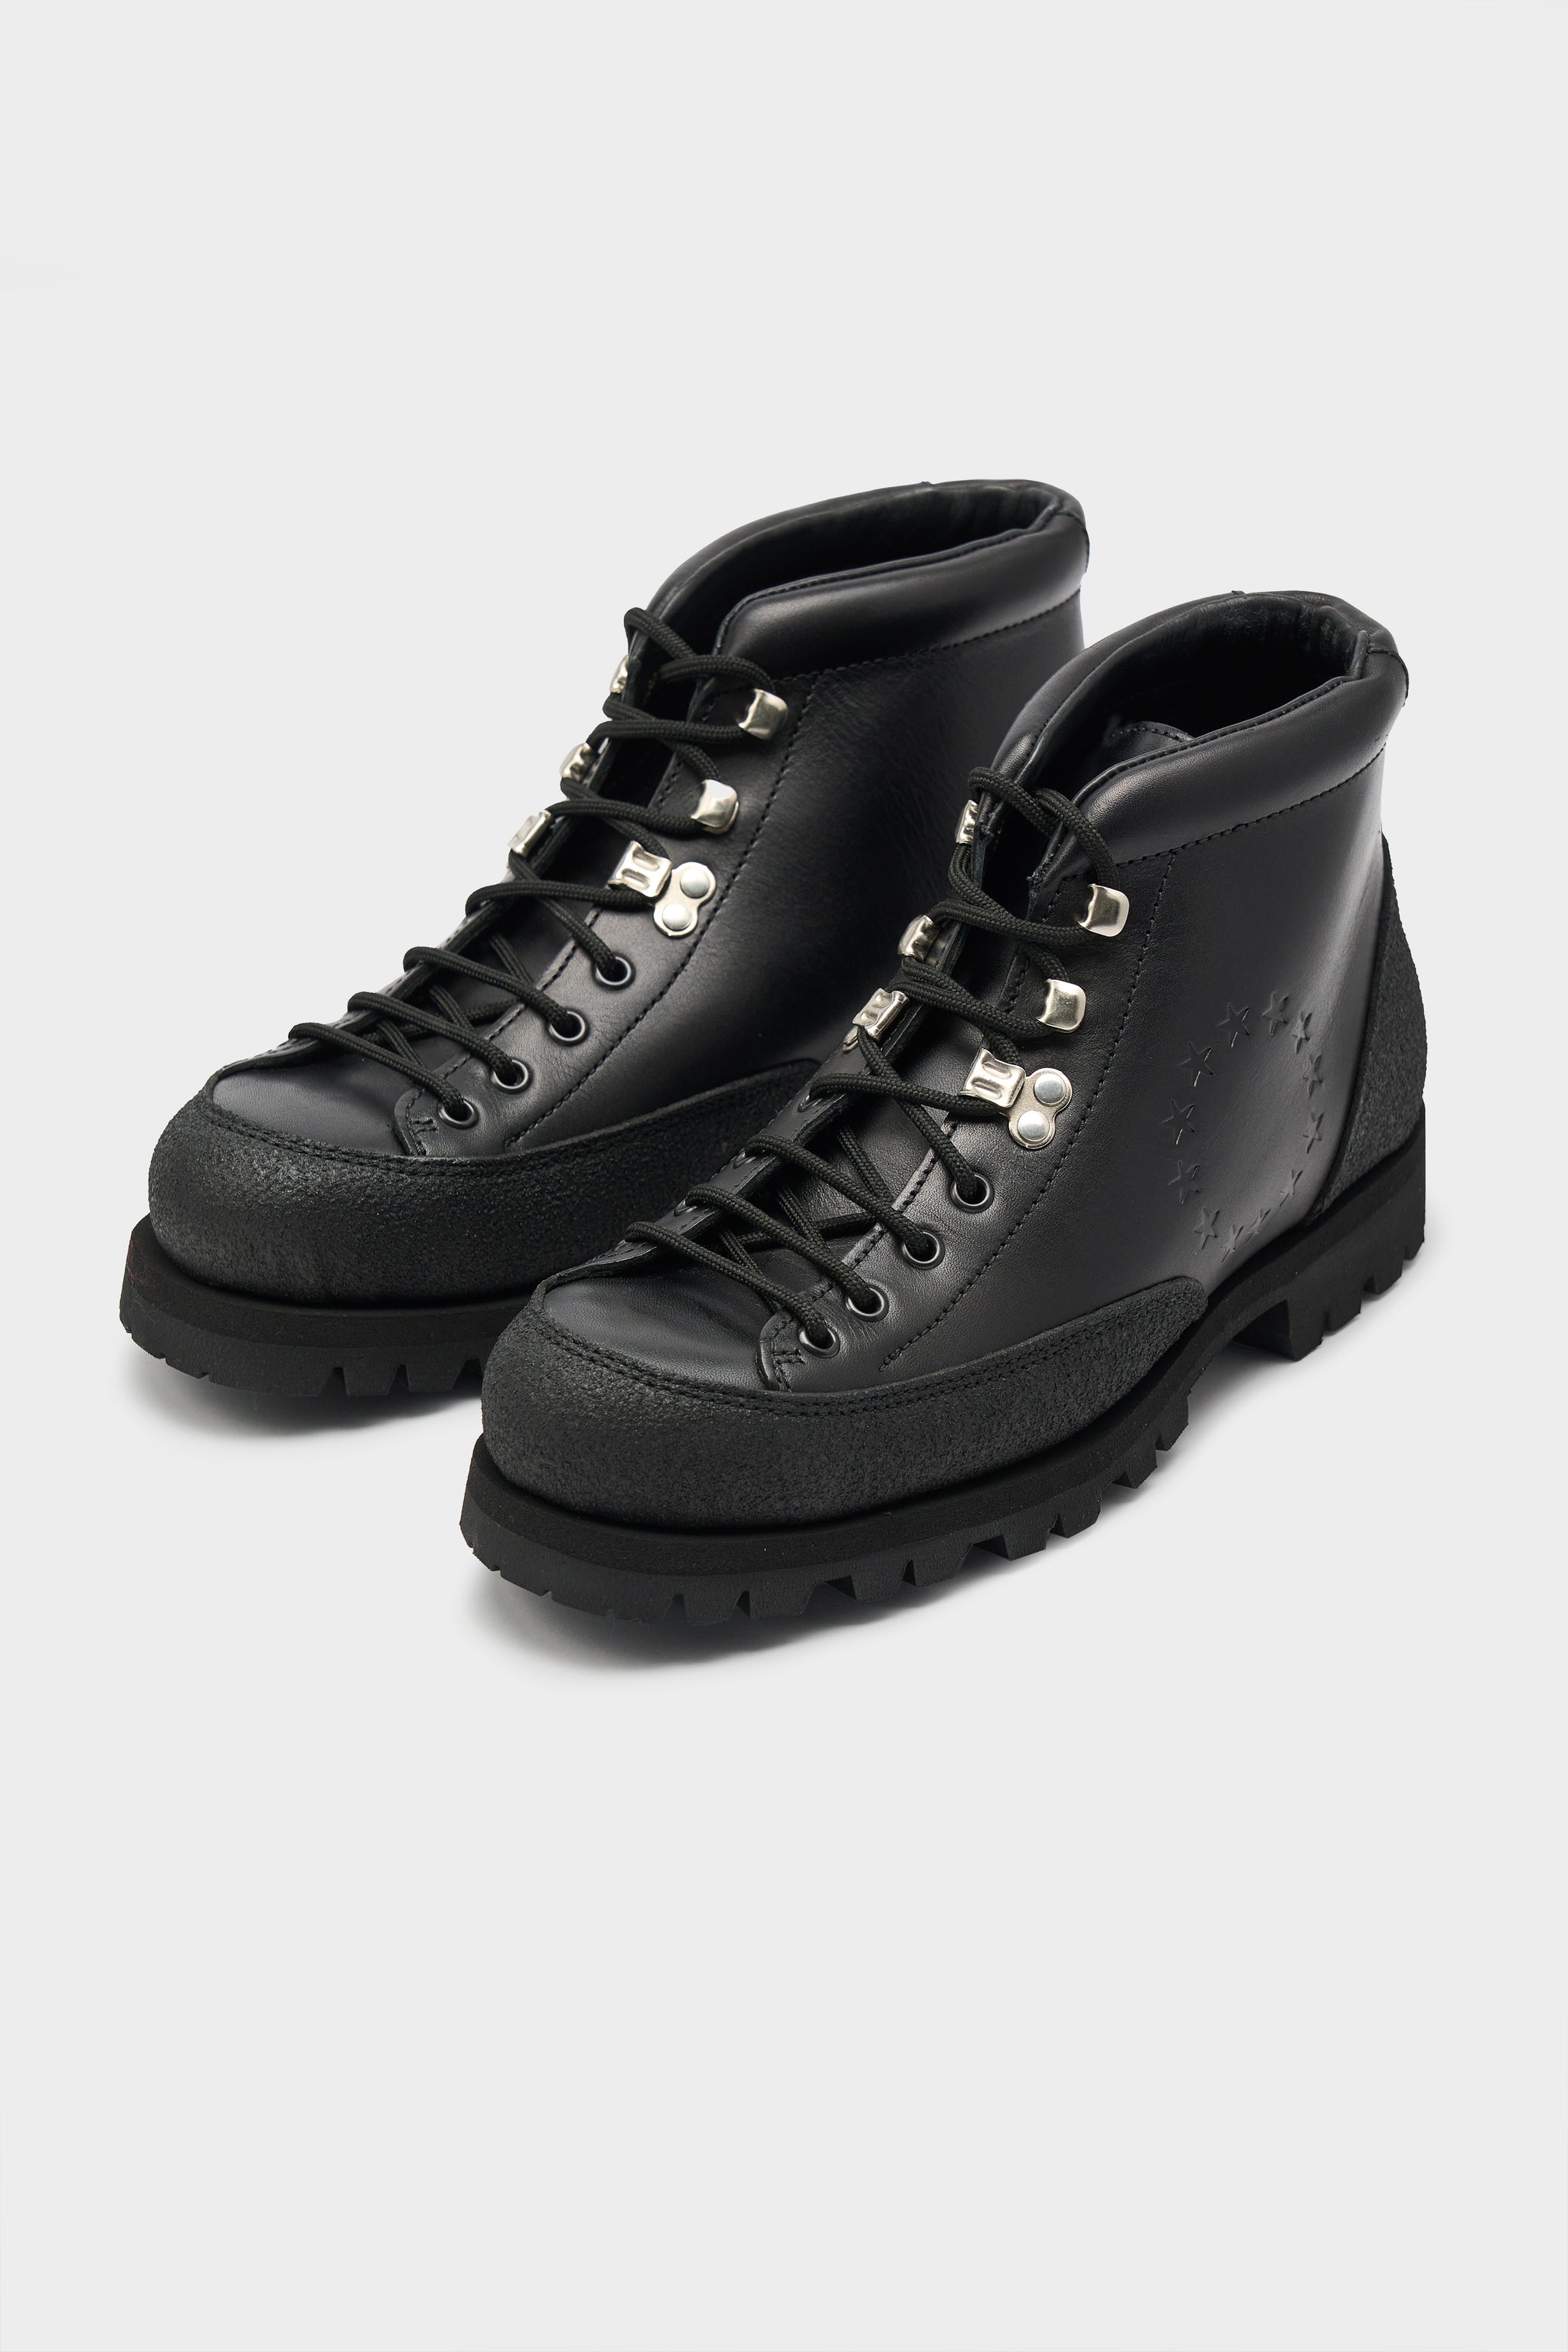 Études YOSEMITE BLACK shoes 2